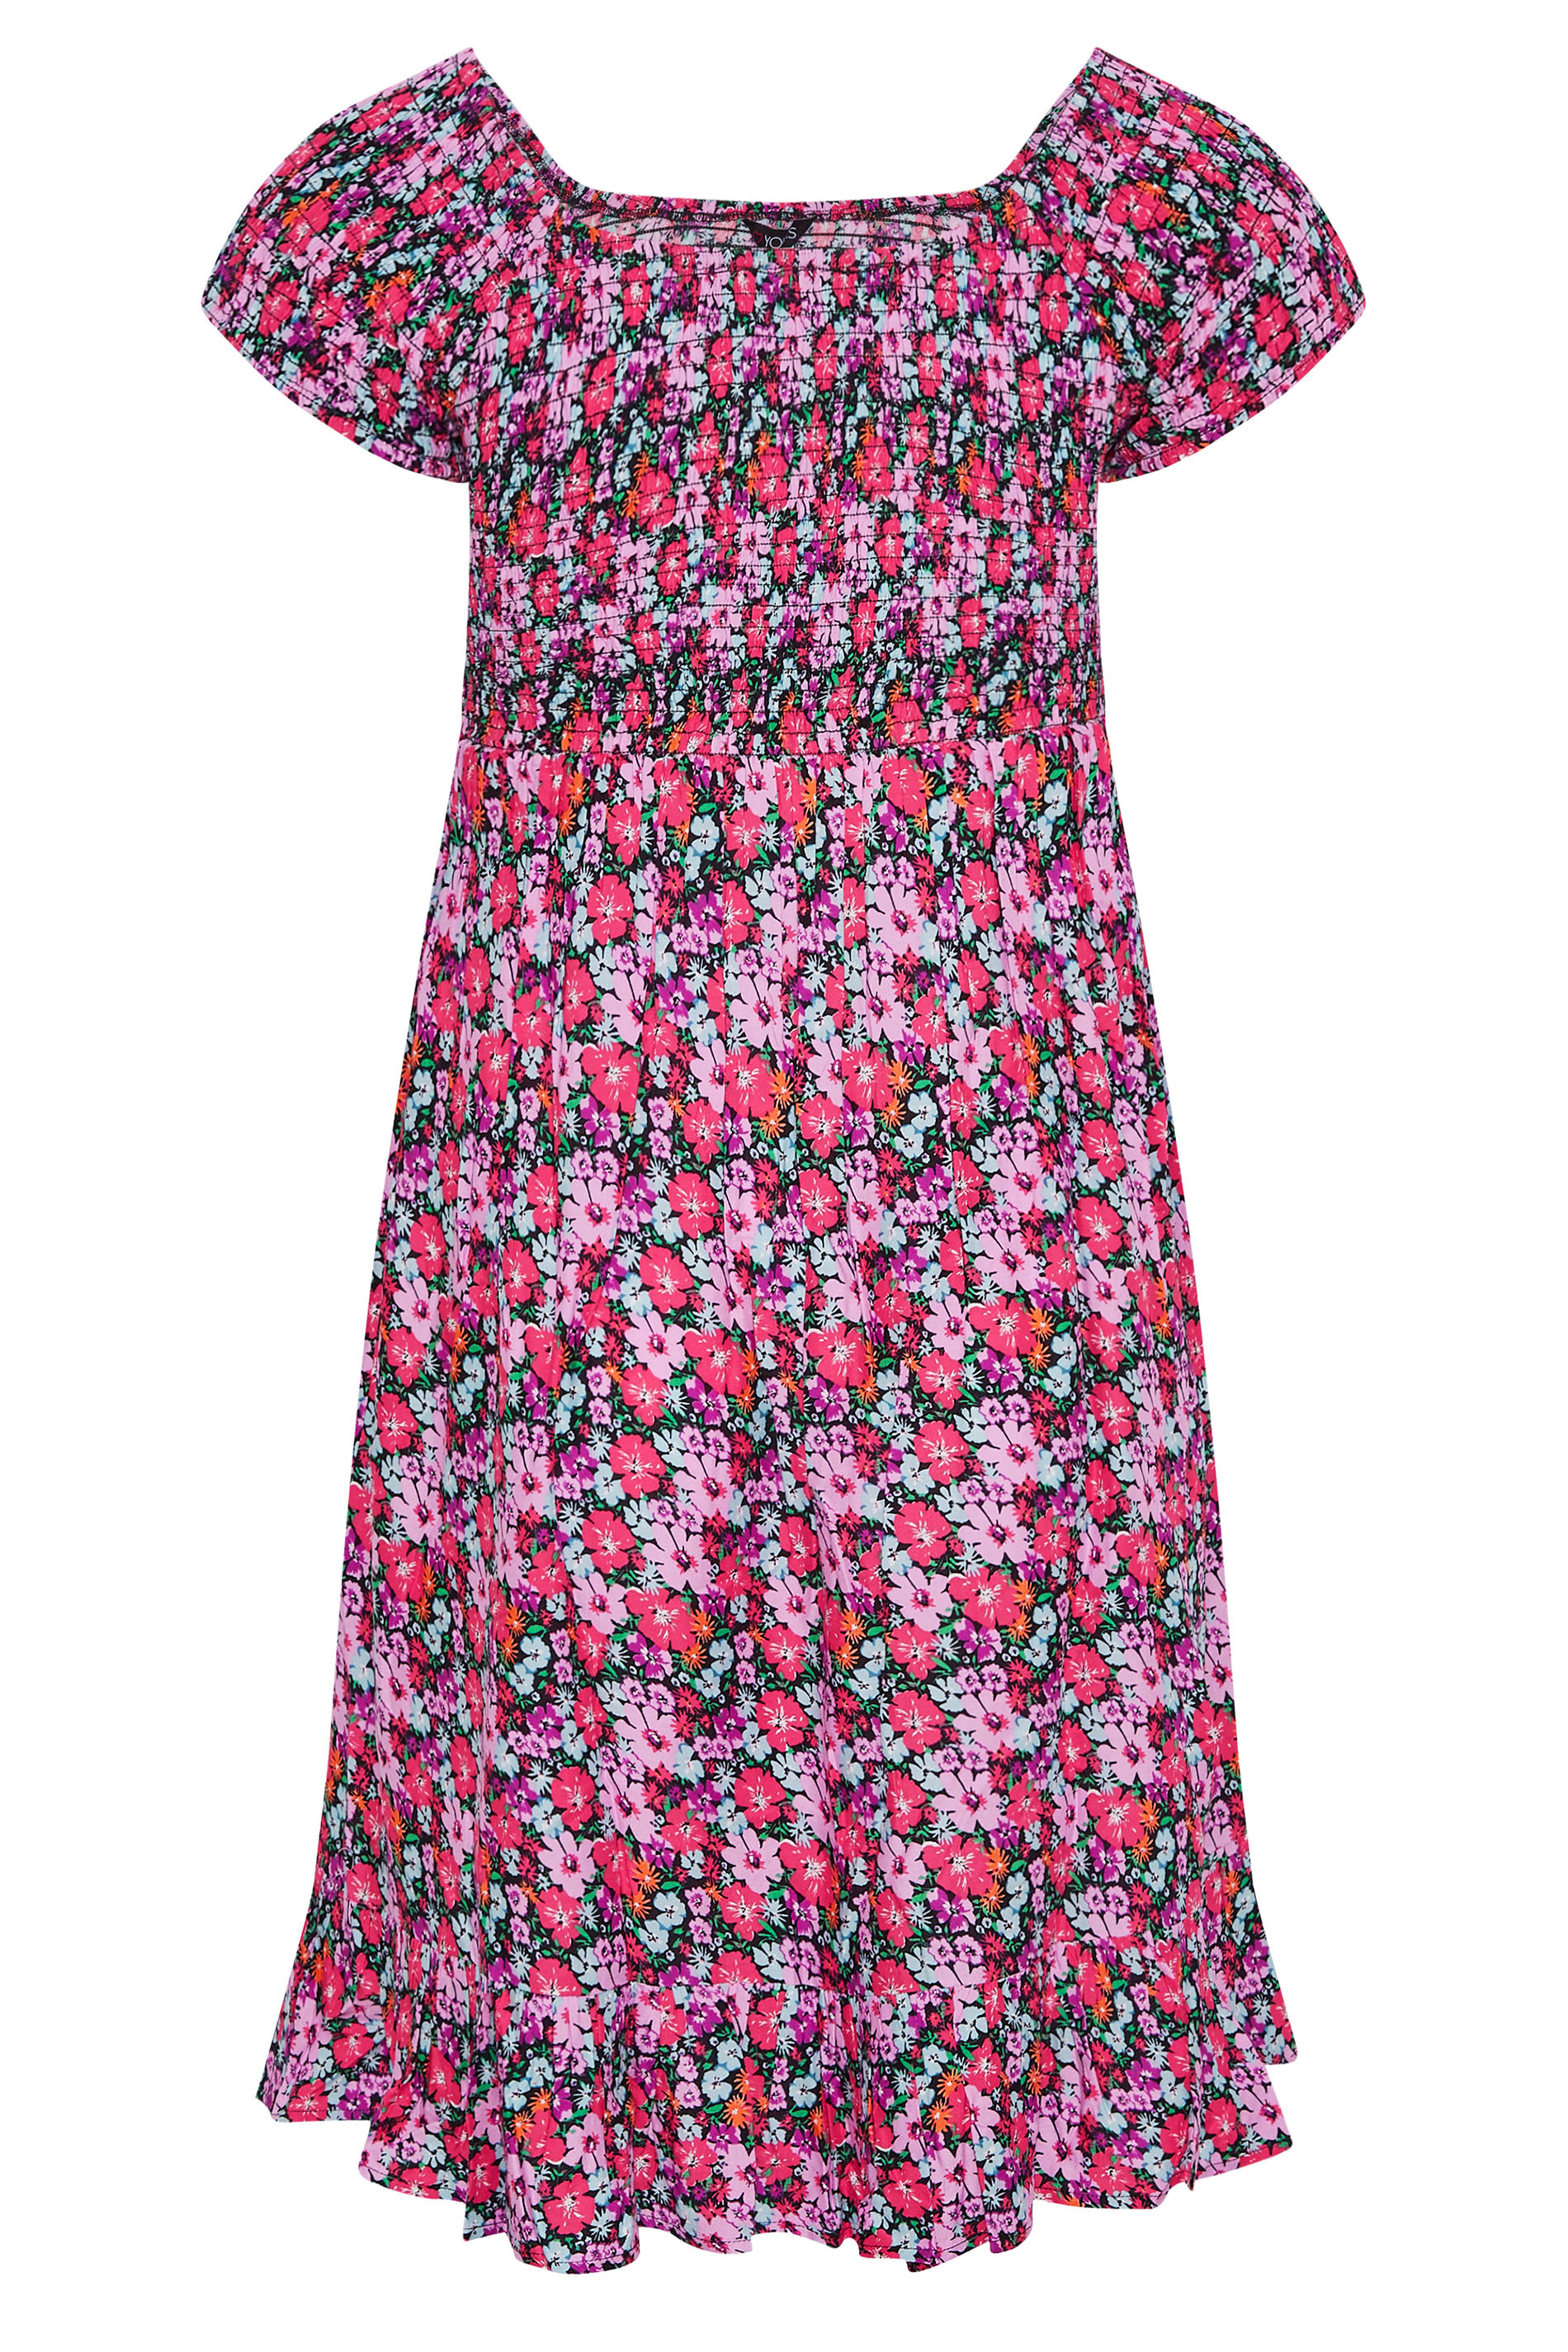 Robes Grande Taille Grande taille  Robes Mi-Longue | Robe Crayon Rose Floral Encolure Bardot - RD30027